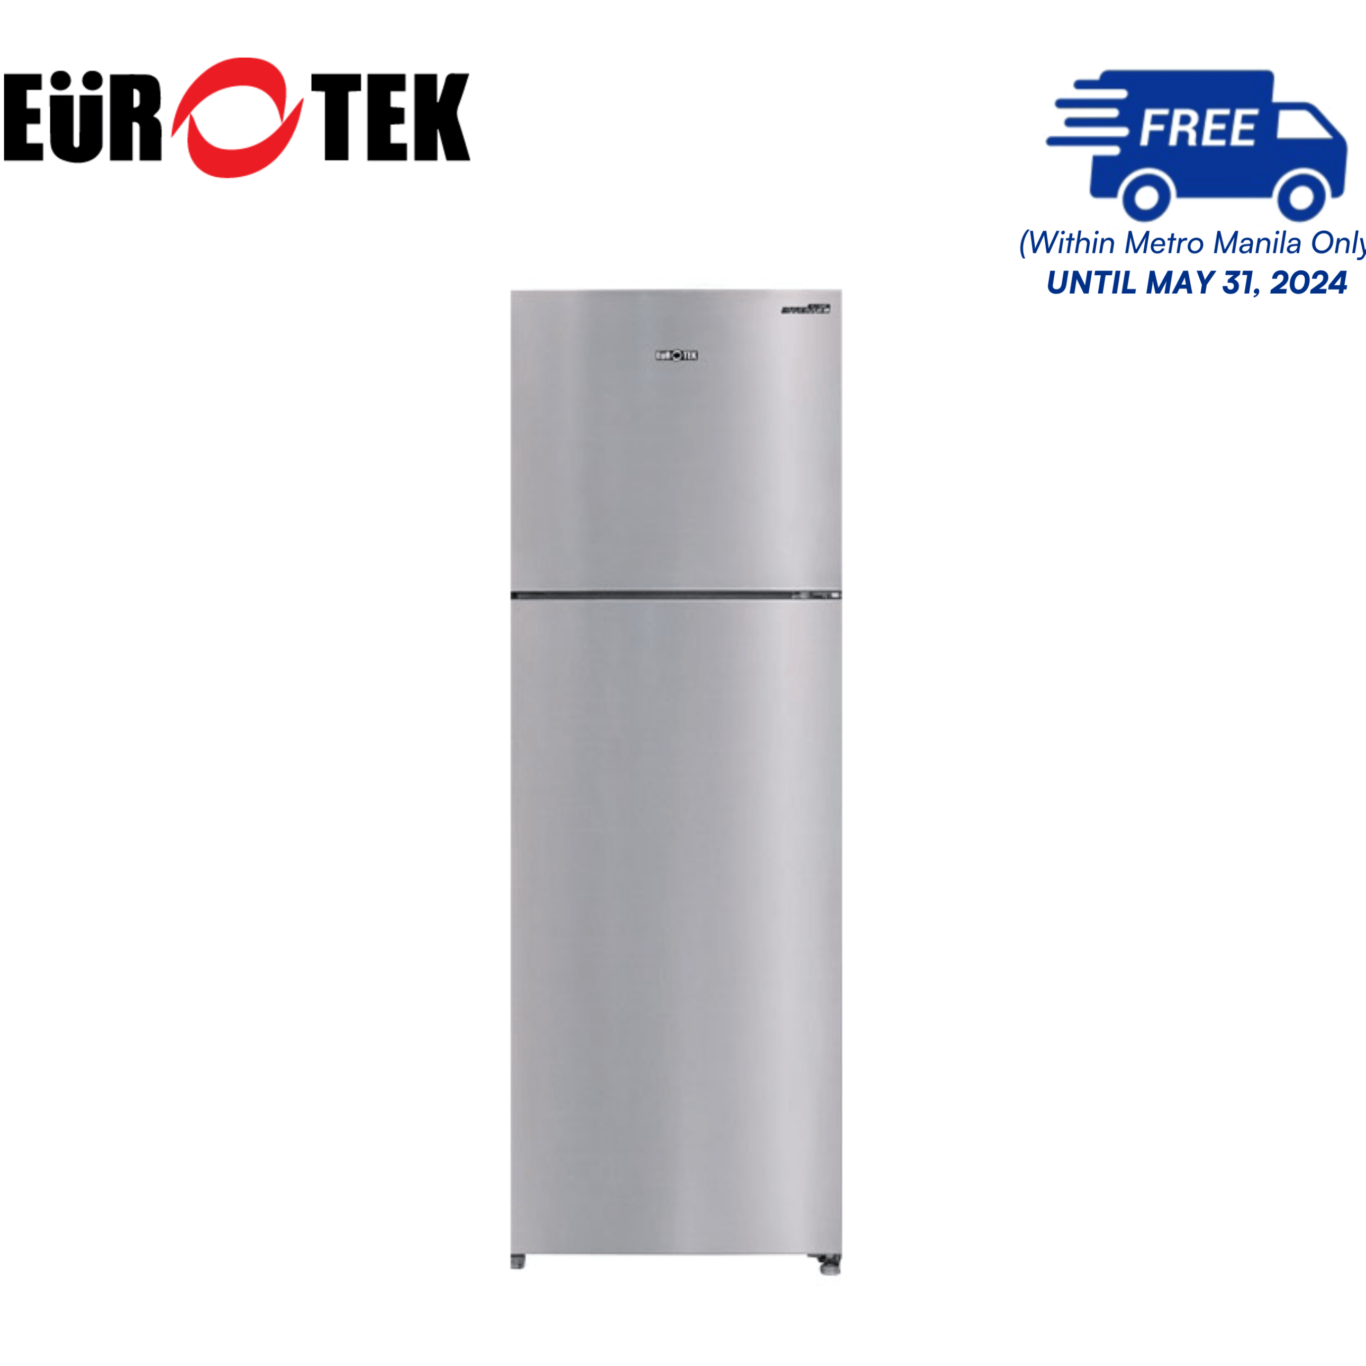 Eurotek ER365IN